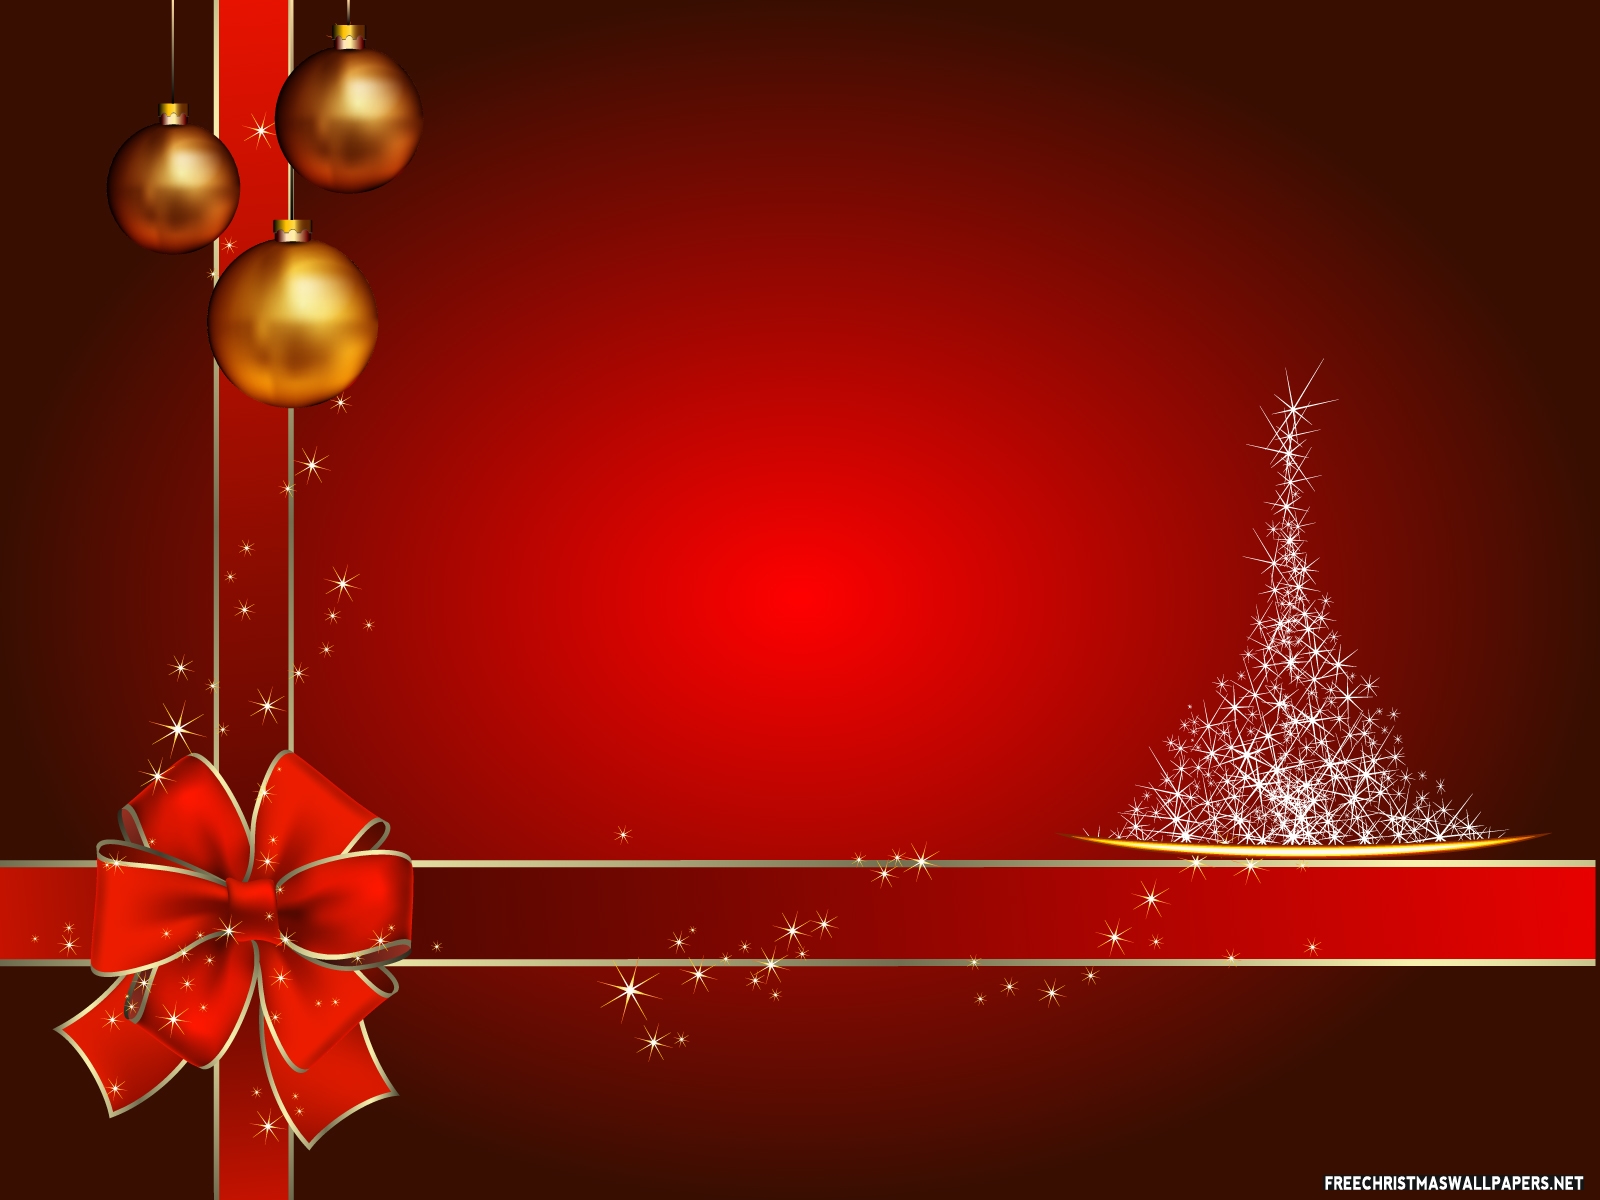 Download wallpapers Golden gift box, 4k, Christmas, golden glittering, New  Year, golden silk bow, golden background, Happy Christmas for desktop free.  Pictures for desktop free